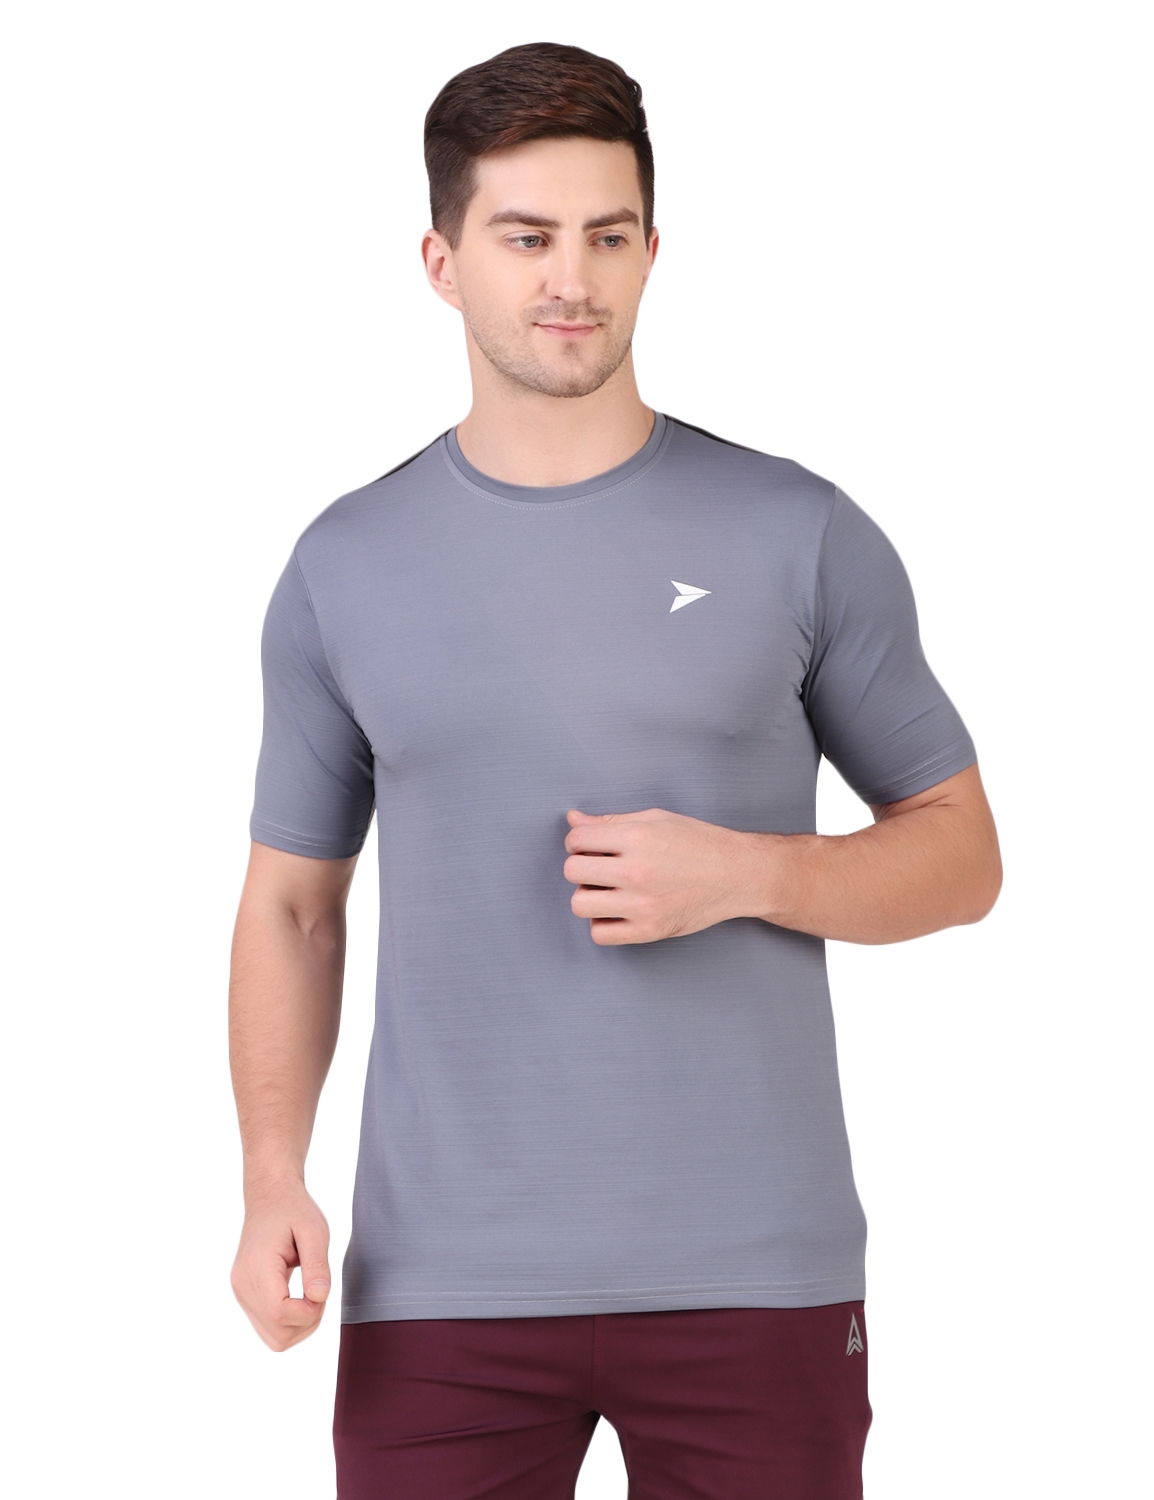 Fitinc | Fitinc Men's Round Neck Slimfit Gym & Active Sports Grey T-Shirt